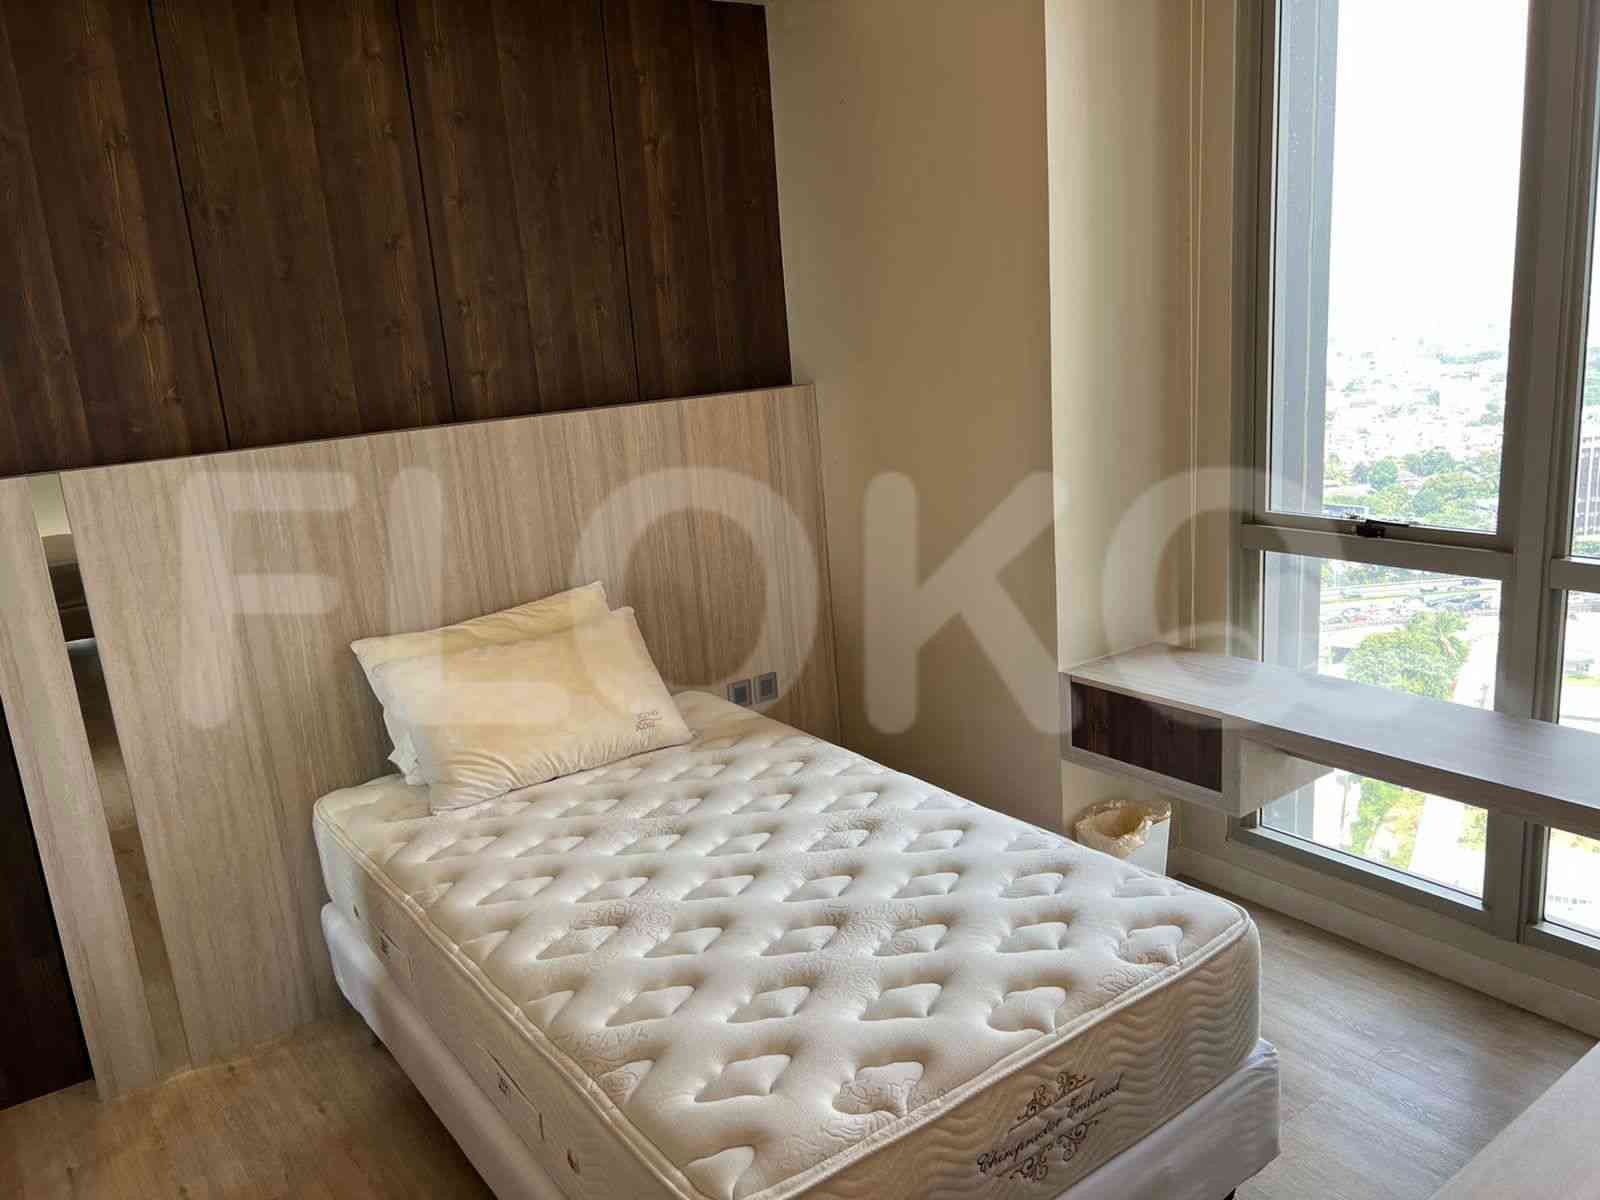 2 Bedroom on 25th Floor for Rent in Taman Anggrek Residence - fta7c8 6